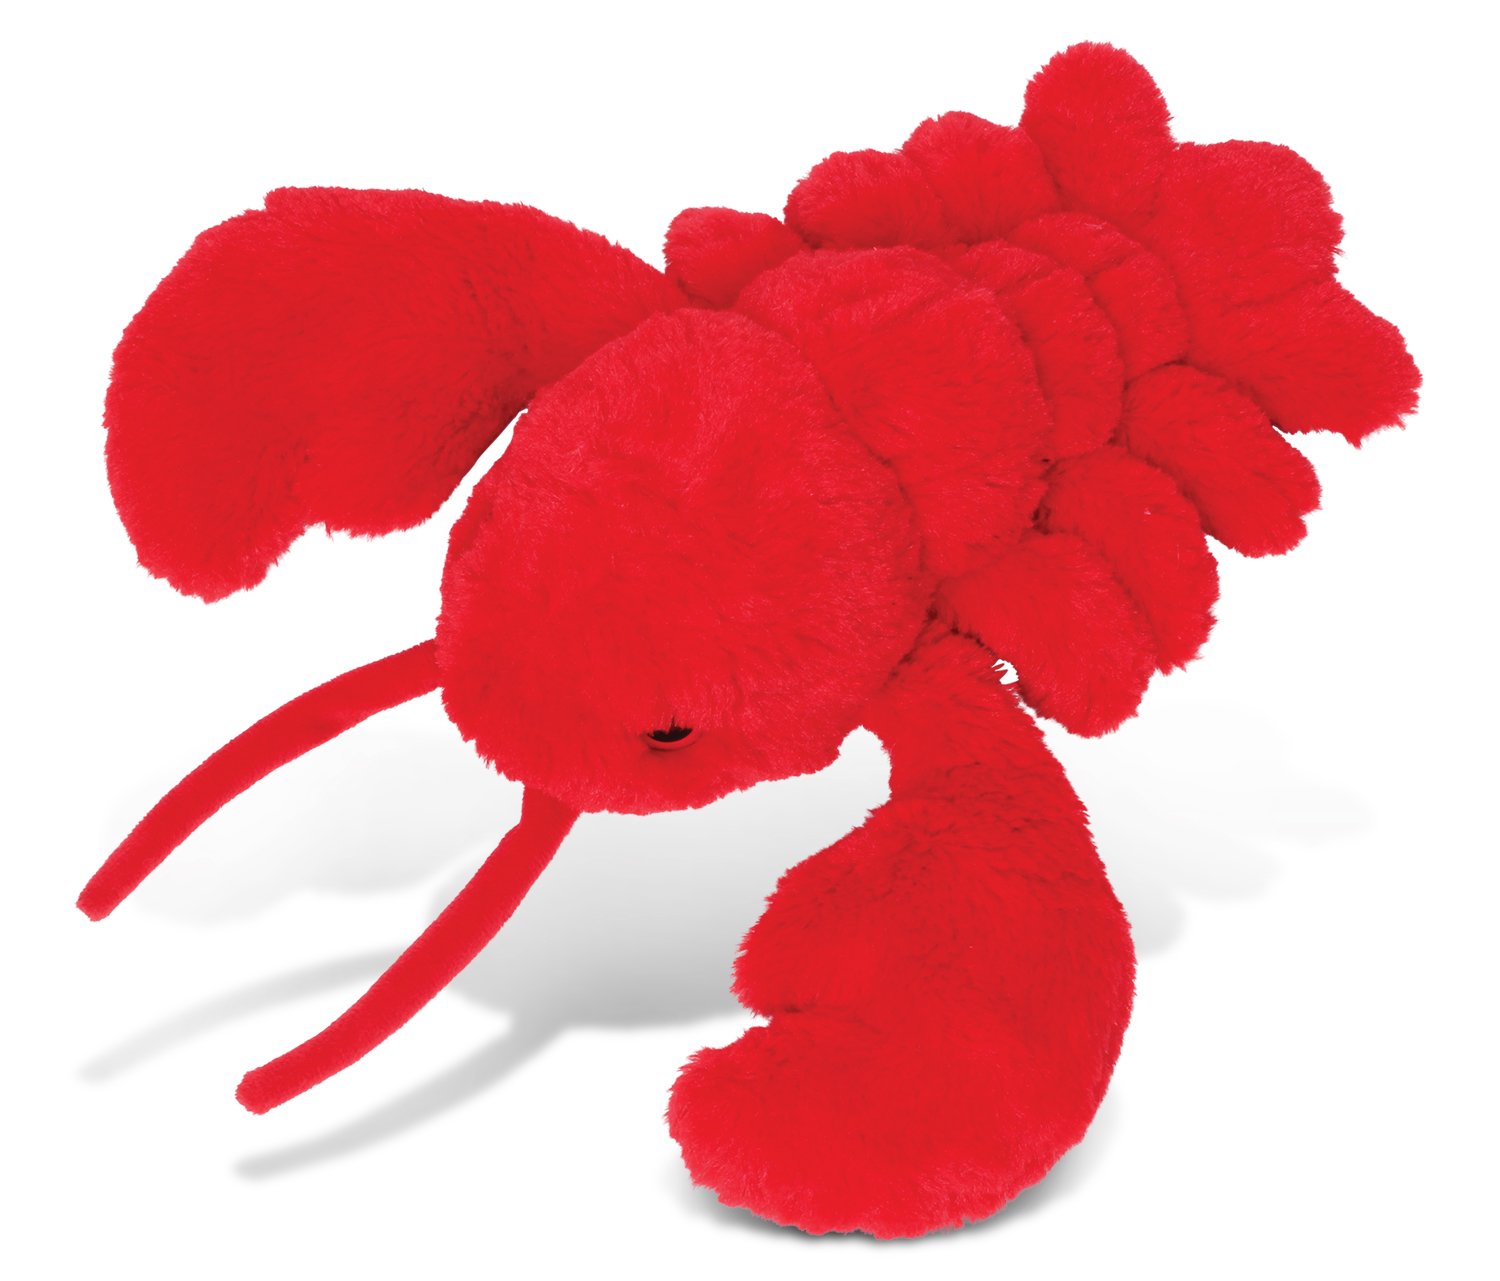 cuddly lobster